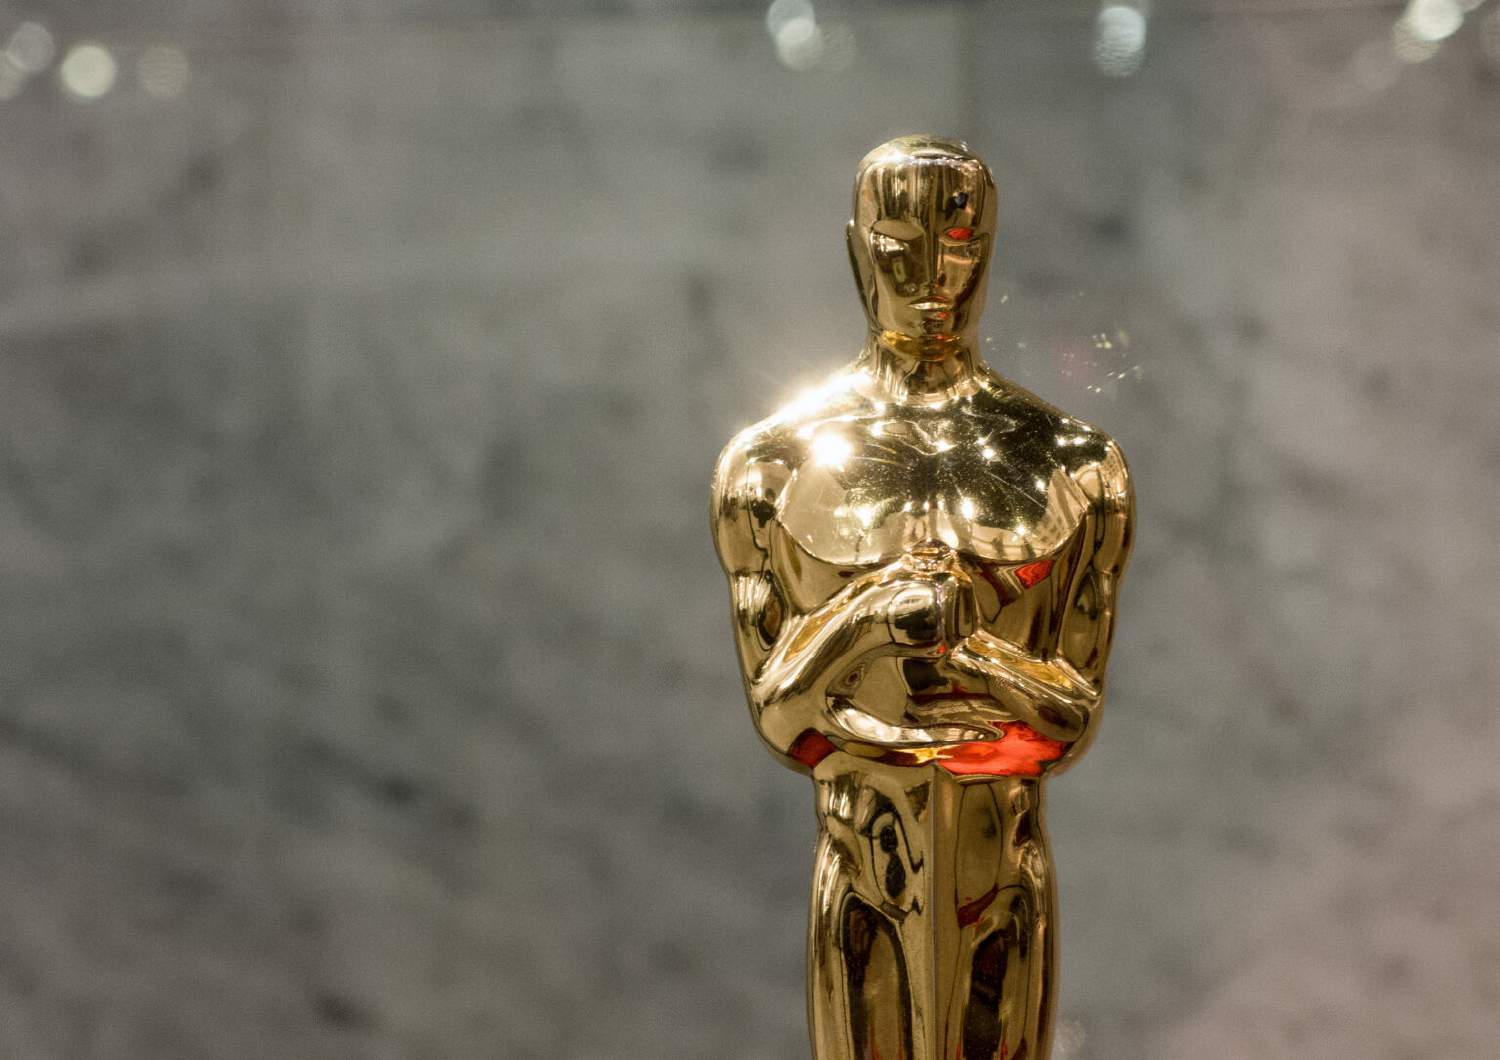 University of York alumnus wins Best Editing at the Oscars